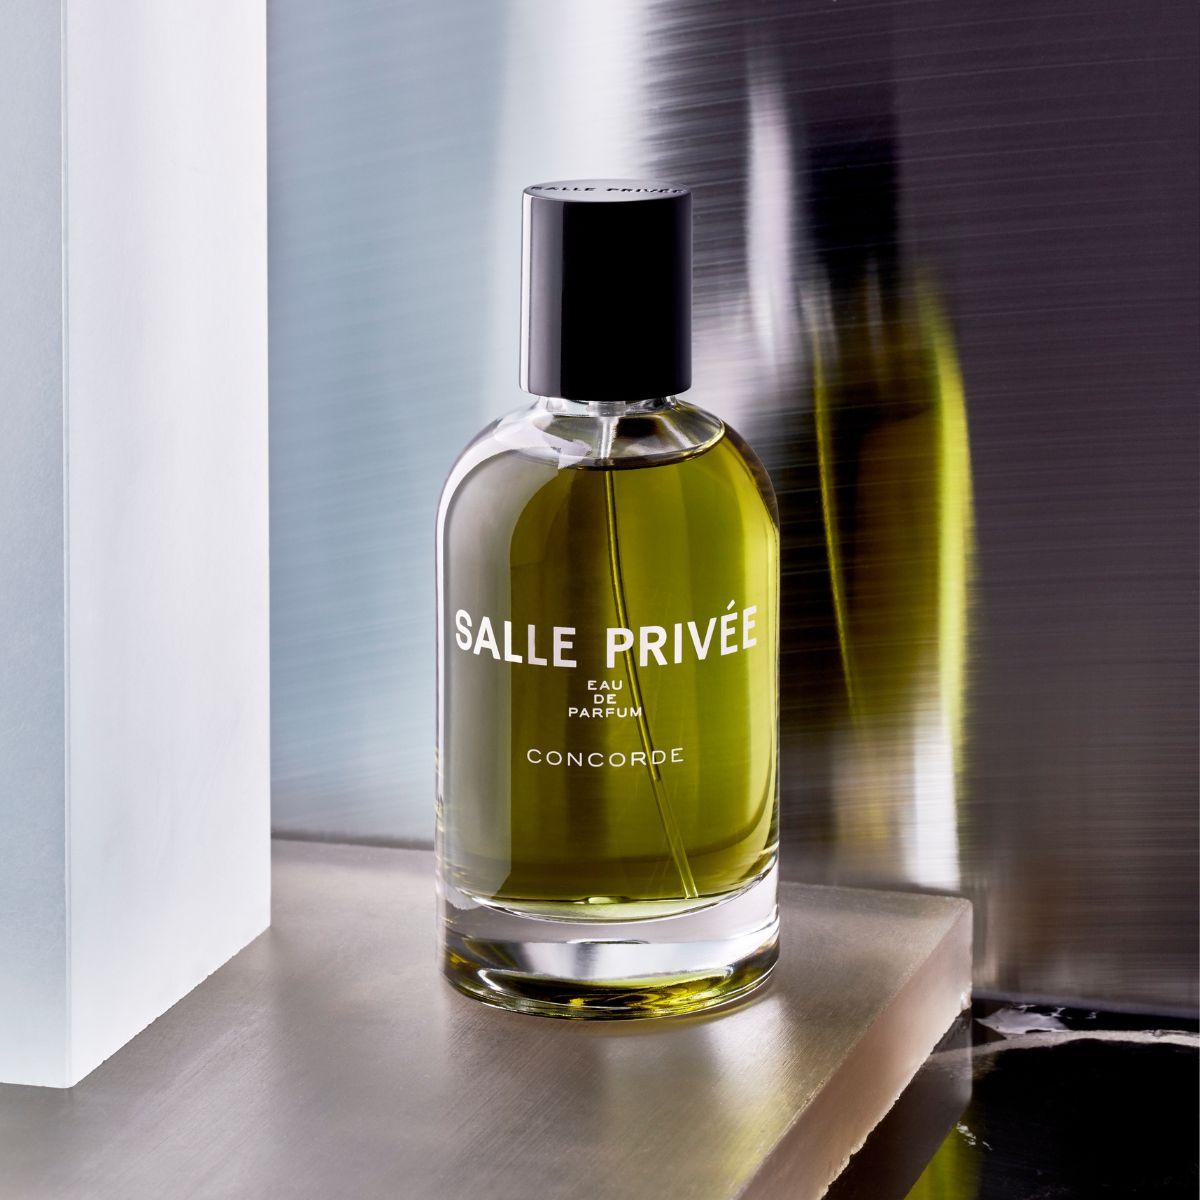 Image of Concorde eau de parfum by the perfume brand Salle Privee